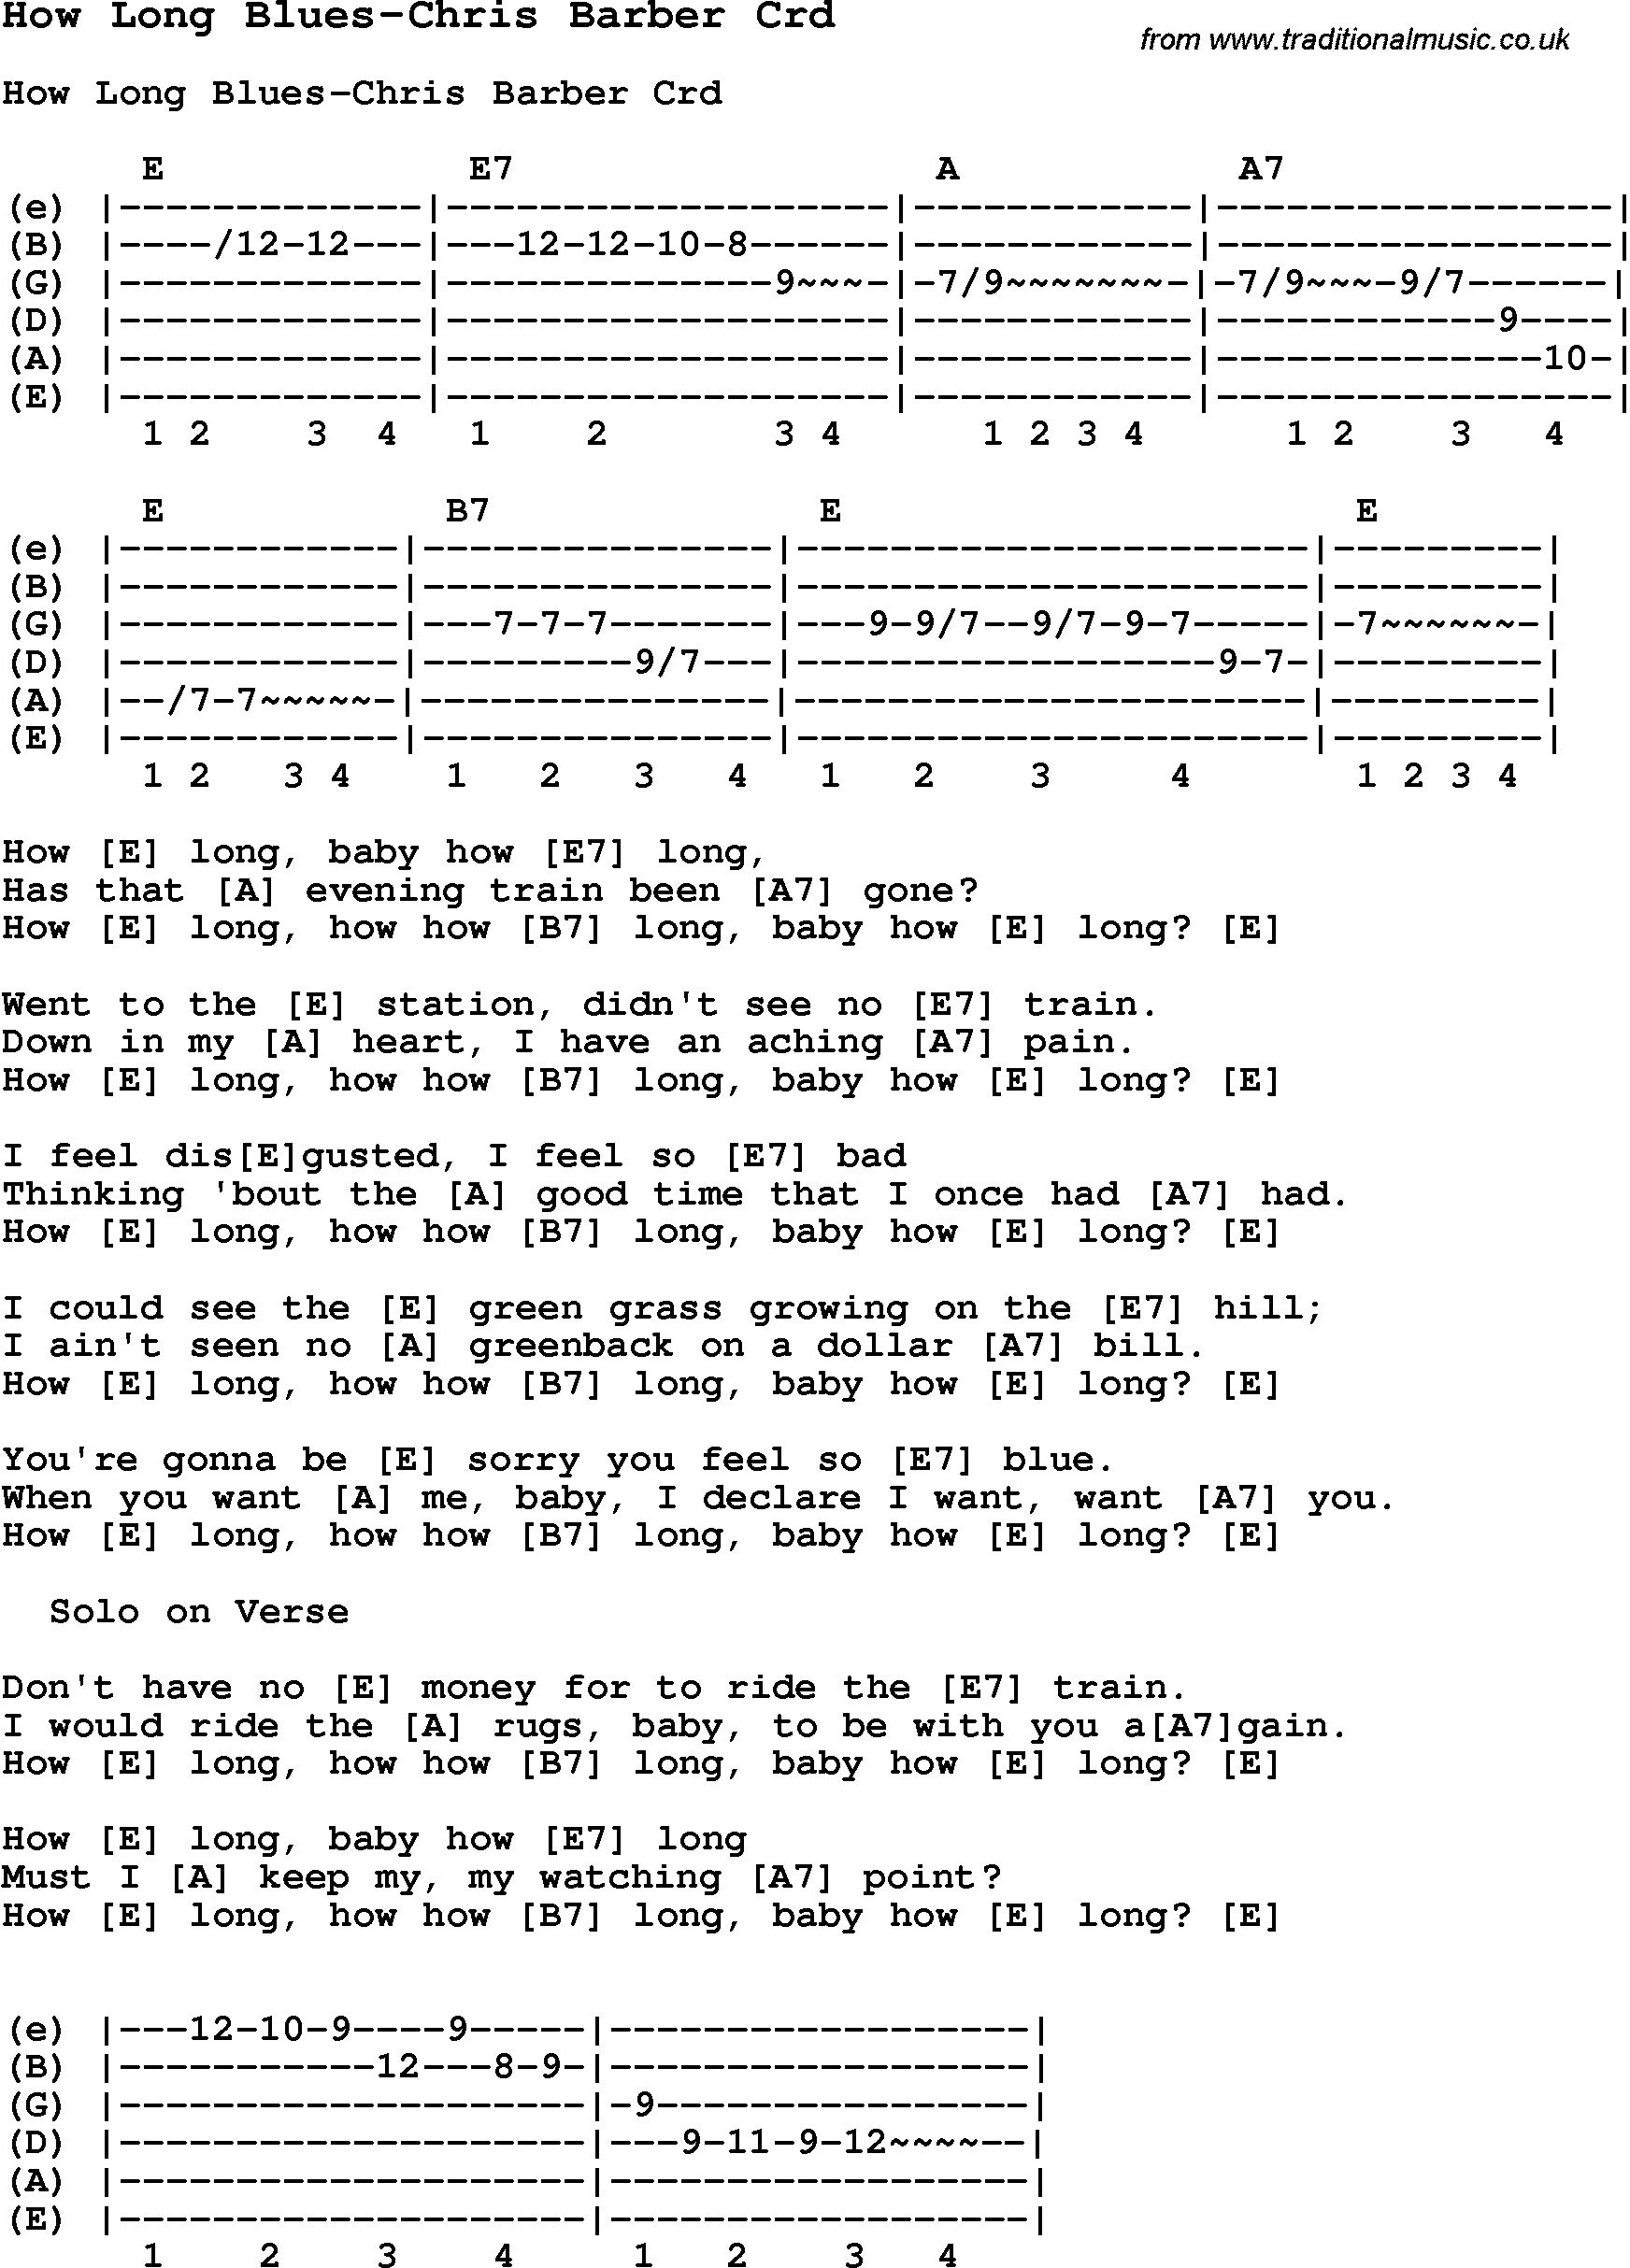 Skiffle Song Lyrics for How Long Blues-Chris Barber with chords for Mandolin, Ukulele, Guitar, Banjo etc.